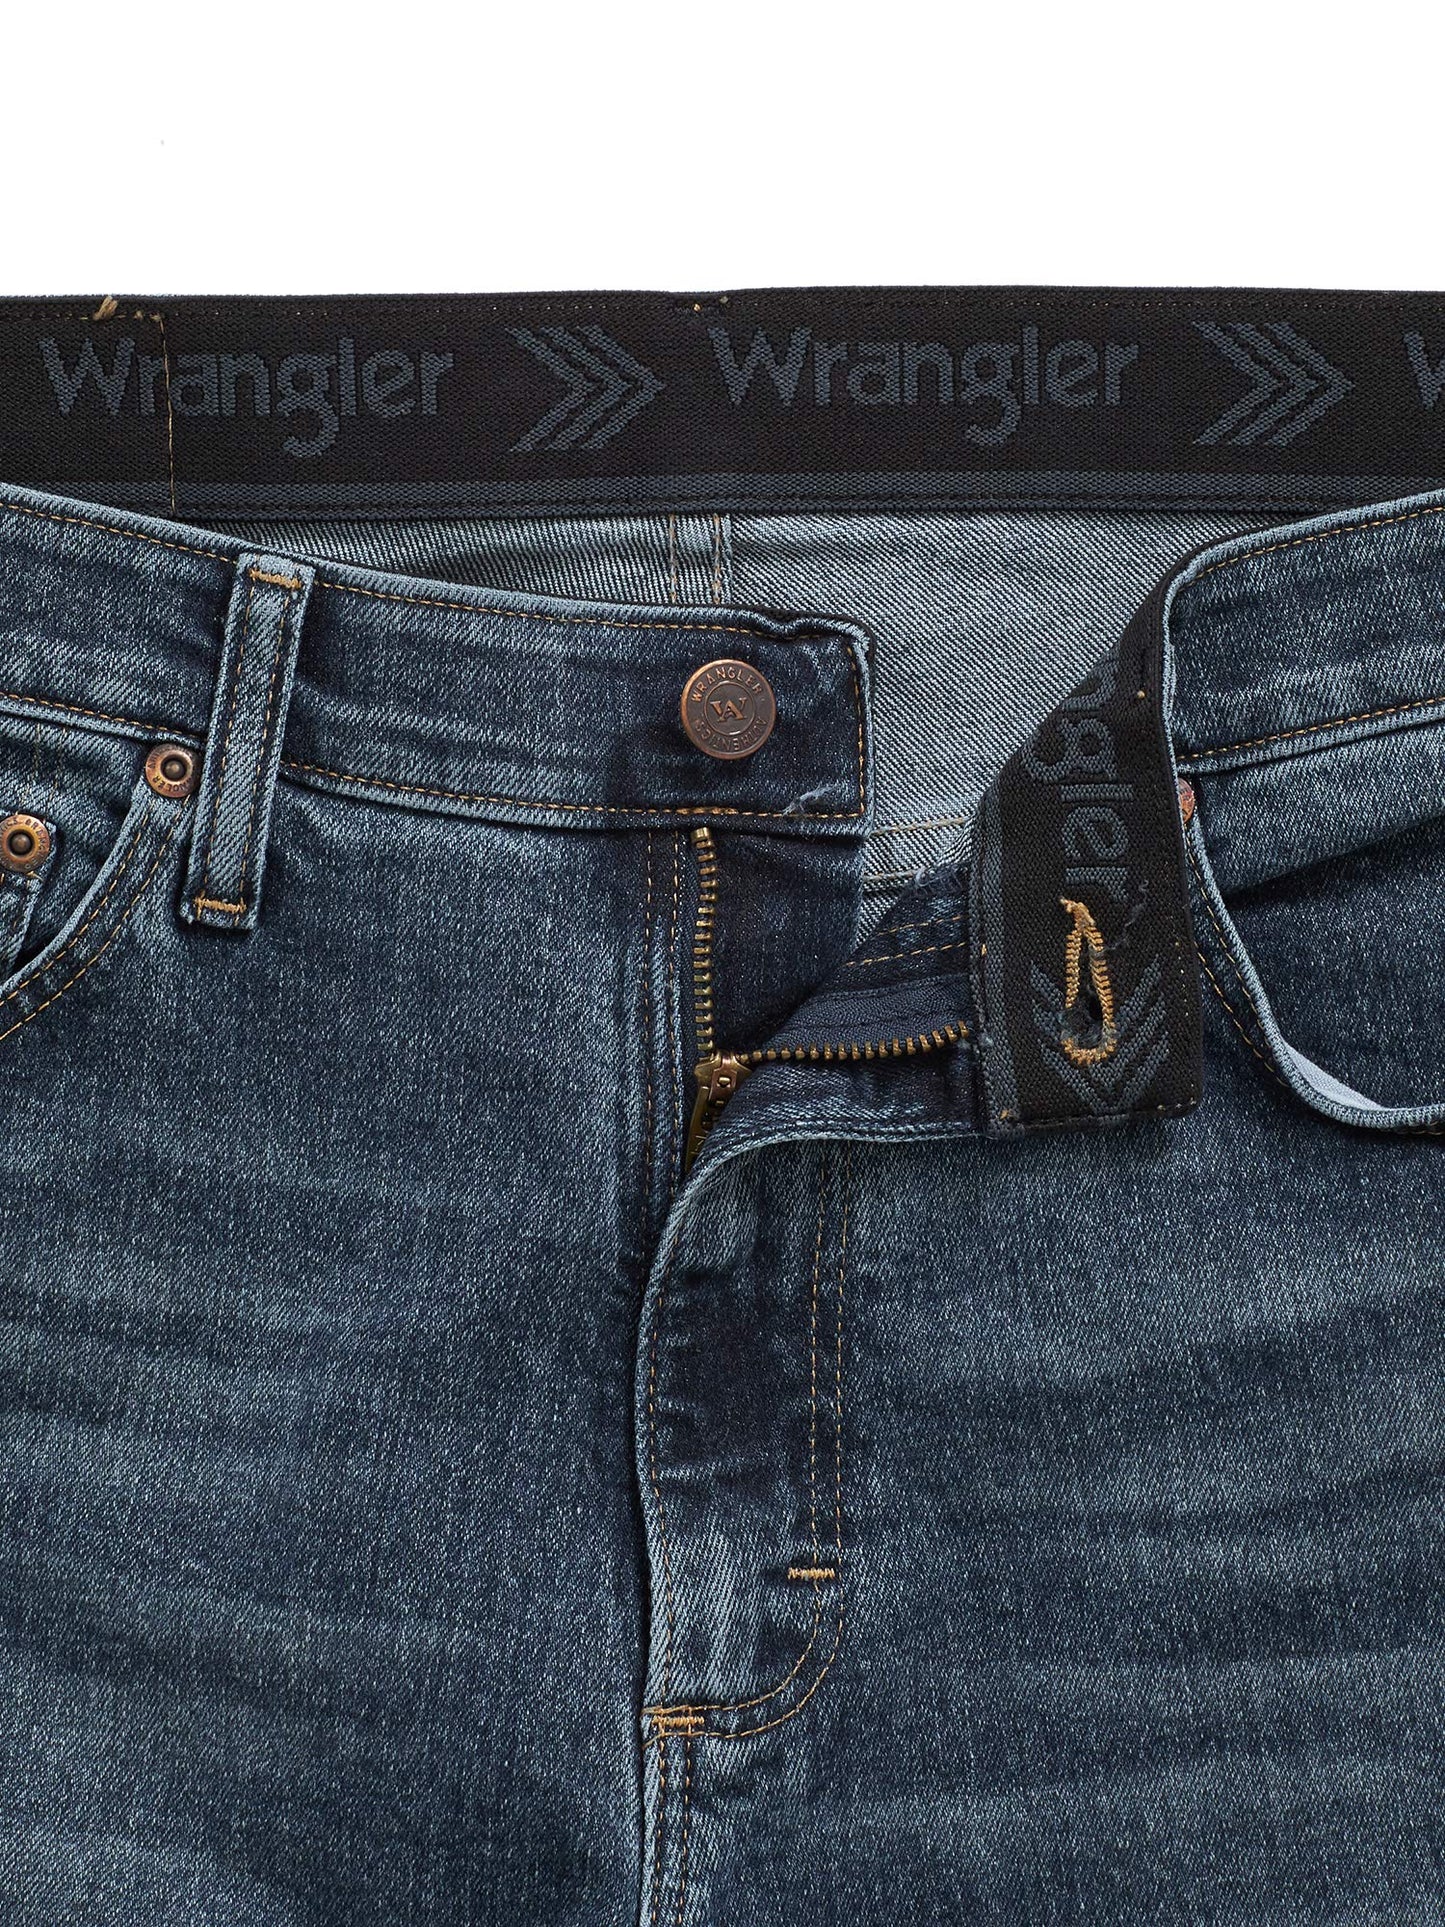 Wrangler Authentics Men's Big & Tall Comfort Flex Waist Relaxed Fit Jean, Smoke, 50W X 32L